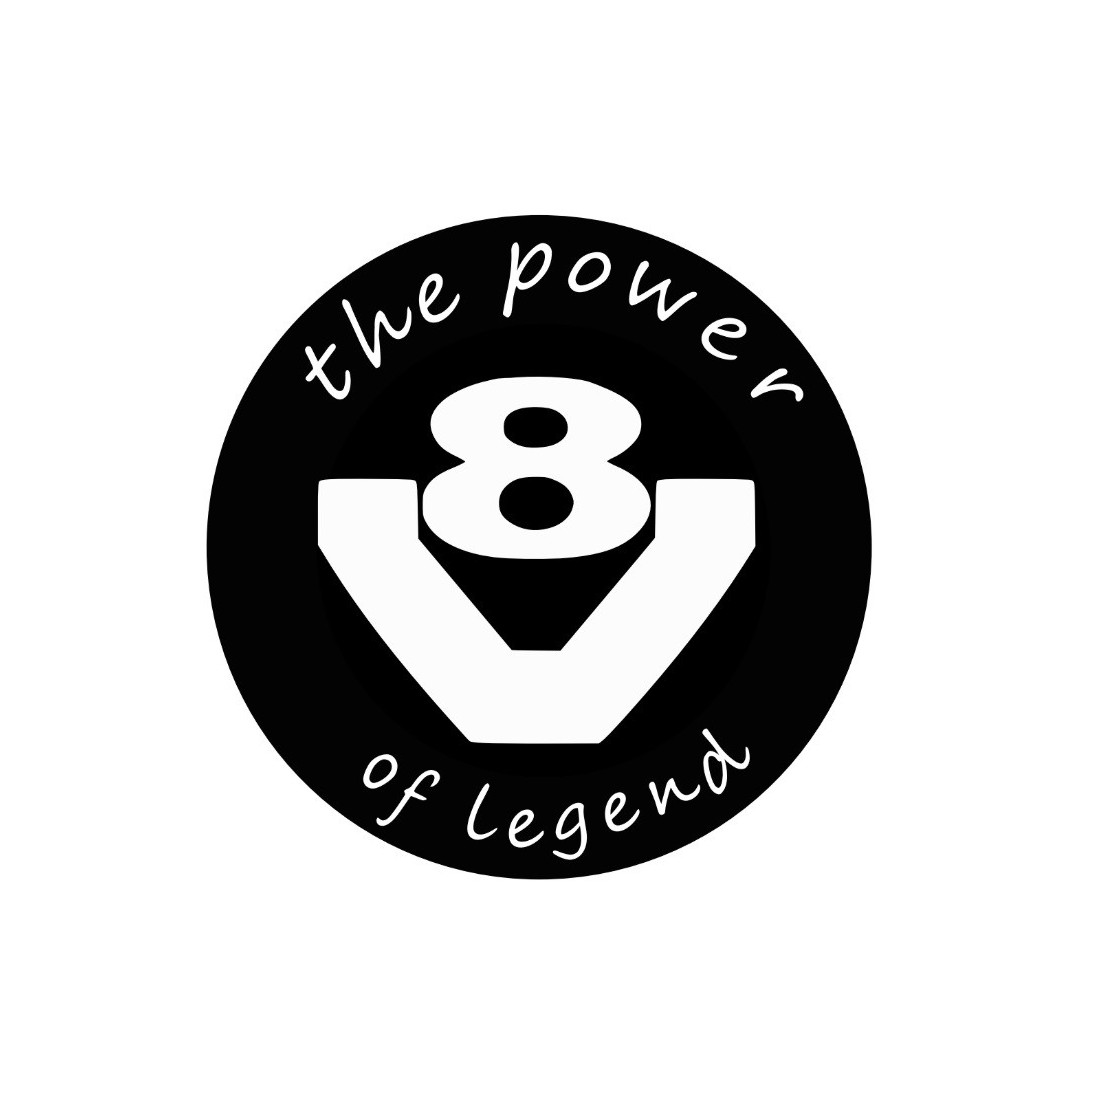 V8 THE POWER OF LEGEND